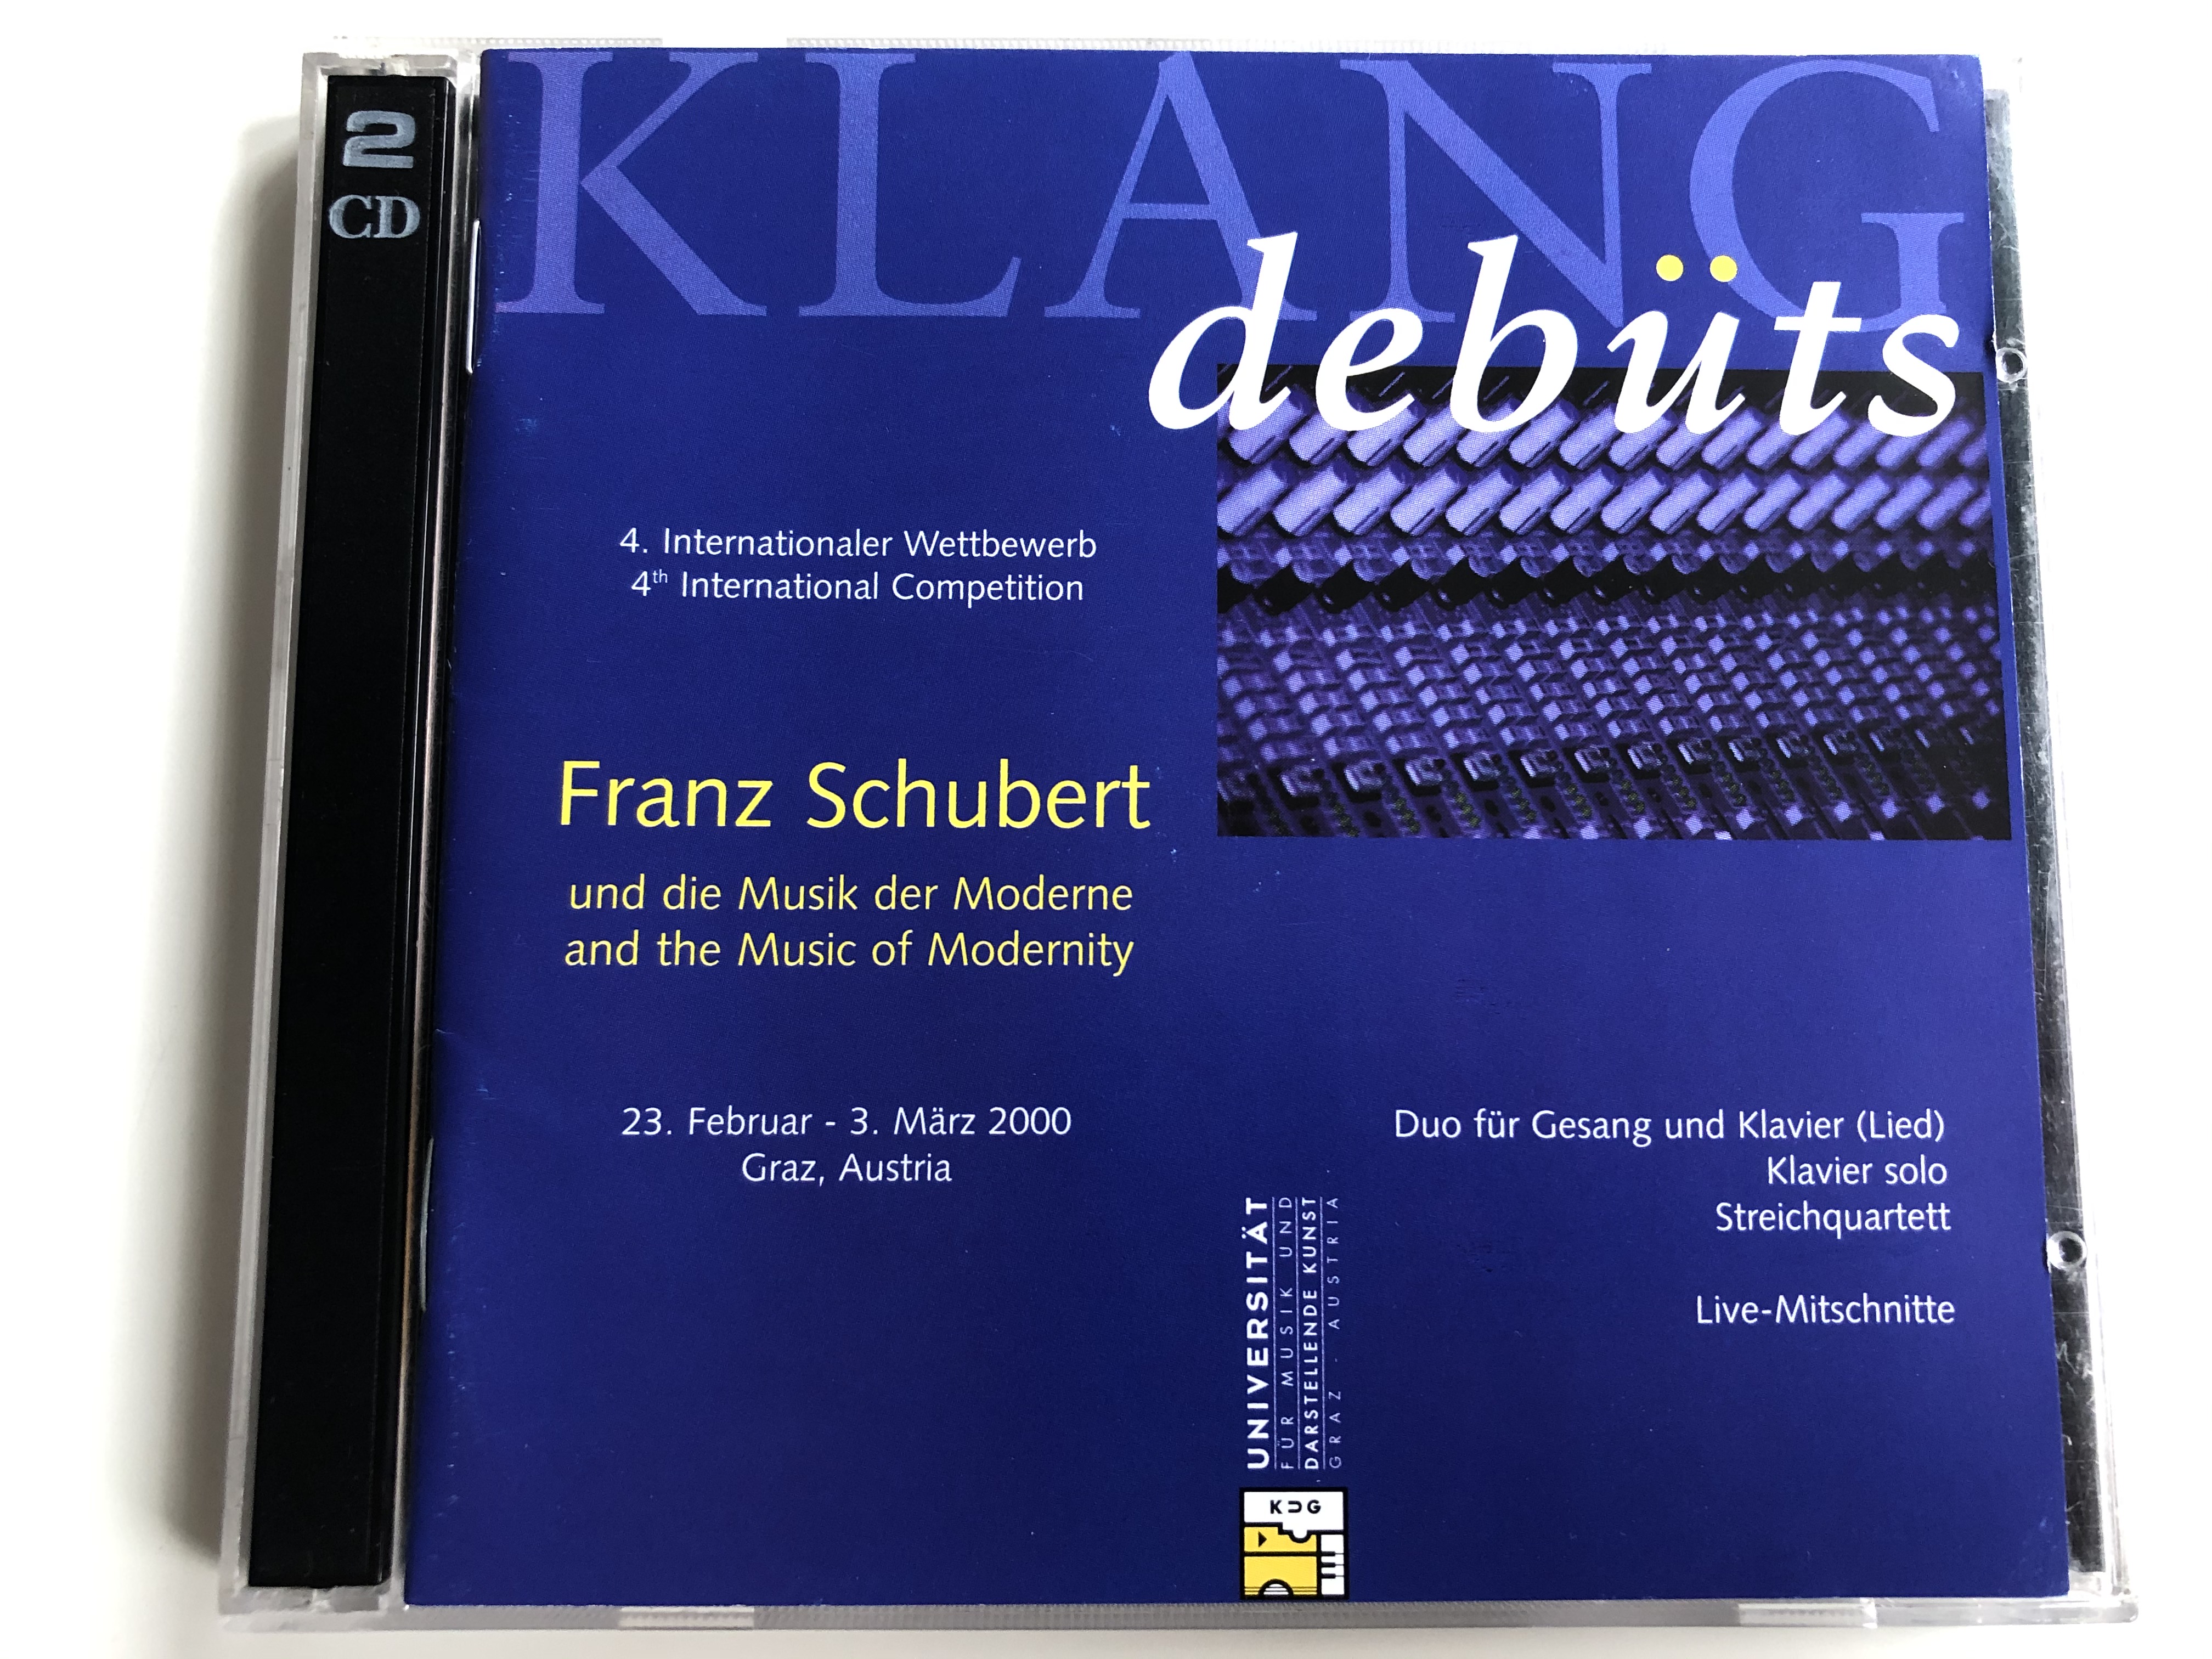 klang-debuts-4th-international-competition-franz-schubert-and-the-music-of-modernity-23.-februar-3.-marz-2000-graz-austria-duo-fur-gesang-und-klavier-lied-klavier-solo-streichquartett-1-.jpg